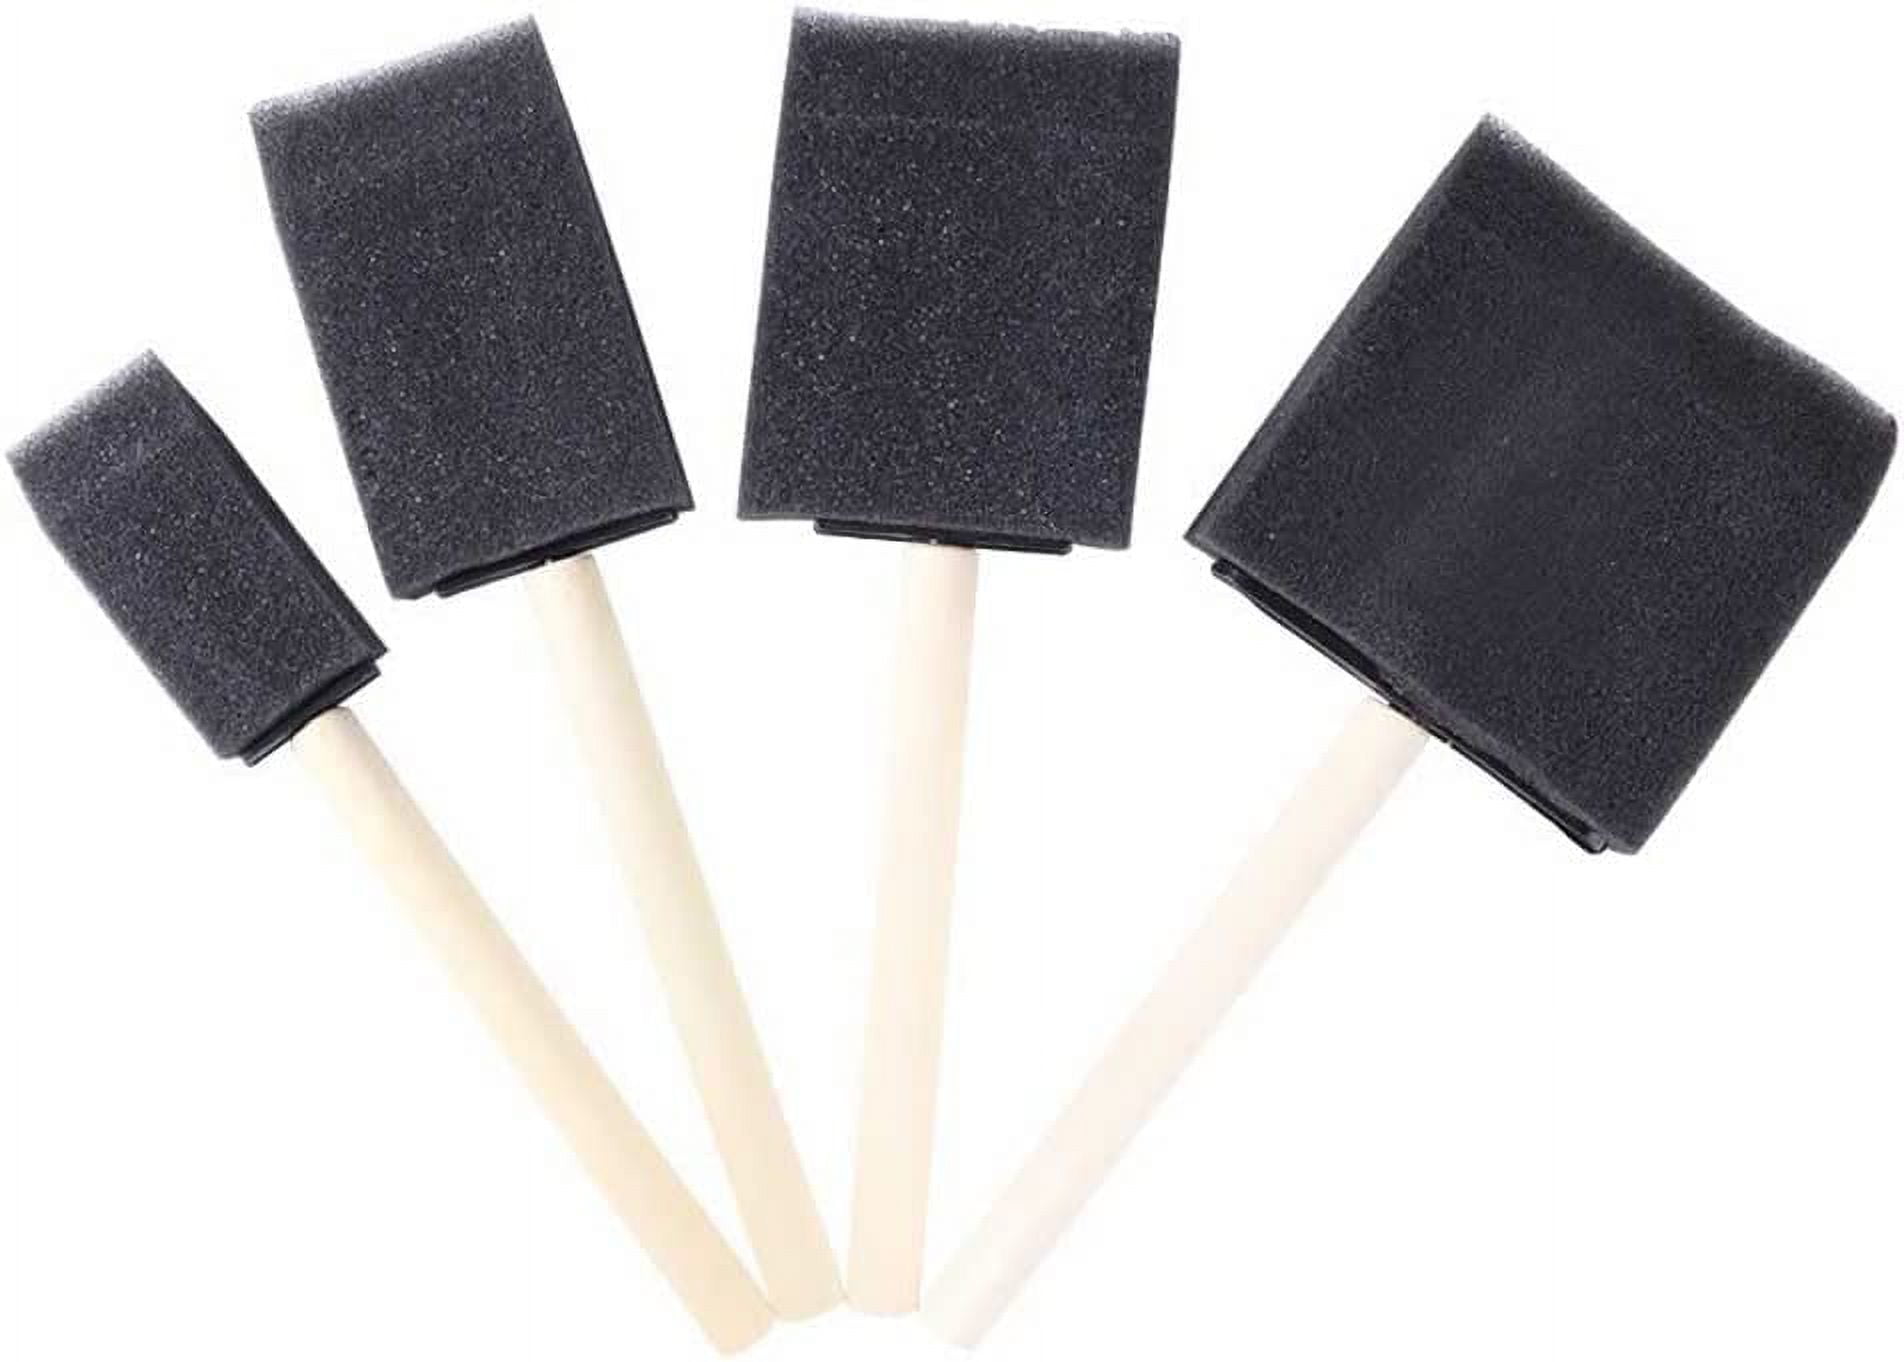 Toorise 50pcs Sponge Brush Set 2 Size Sponge Paint Brush with Handle Wood  Grip Lightweight DIY Sponge Paint Pens for Acrylics Painting DIY Crafts  Wood Staining 